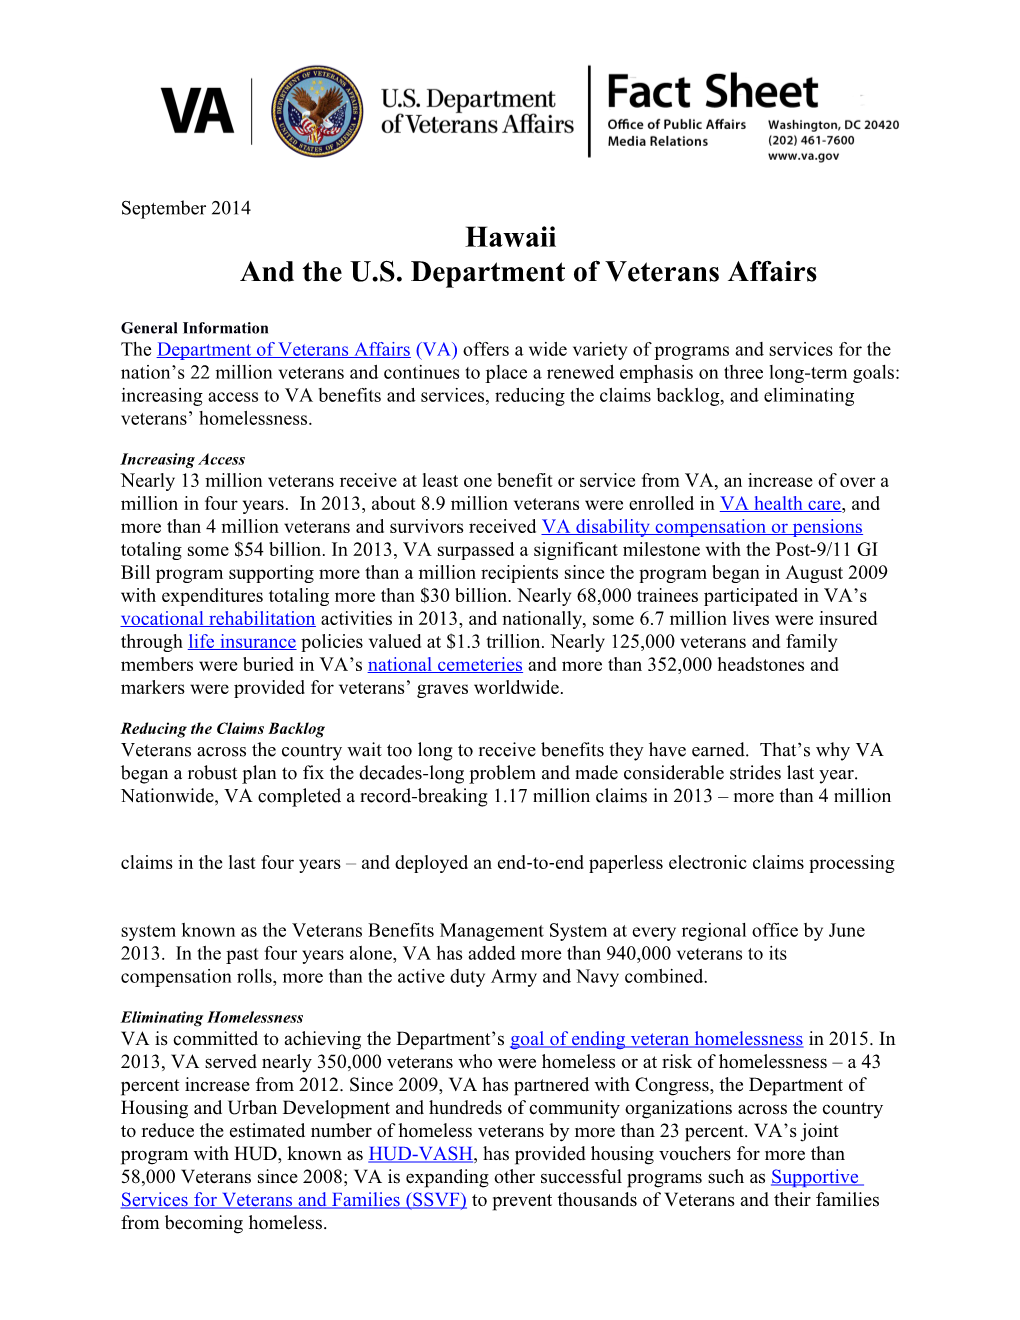 Hawaiiand the U.S. Department of Veterans Affairs